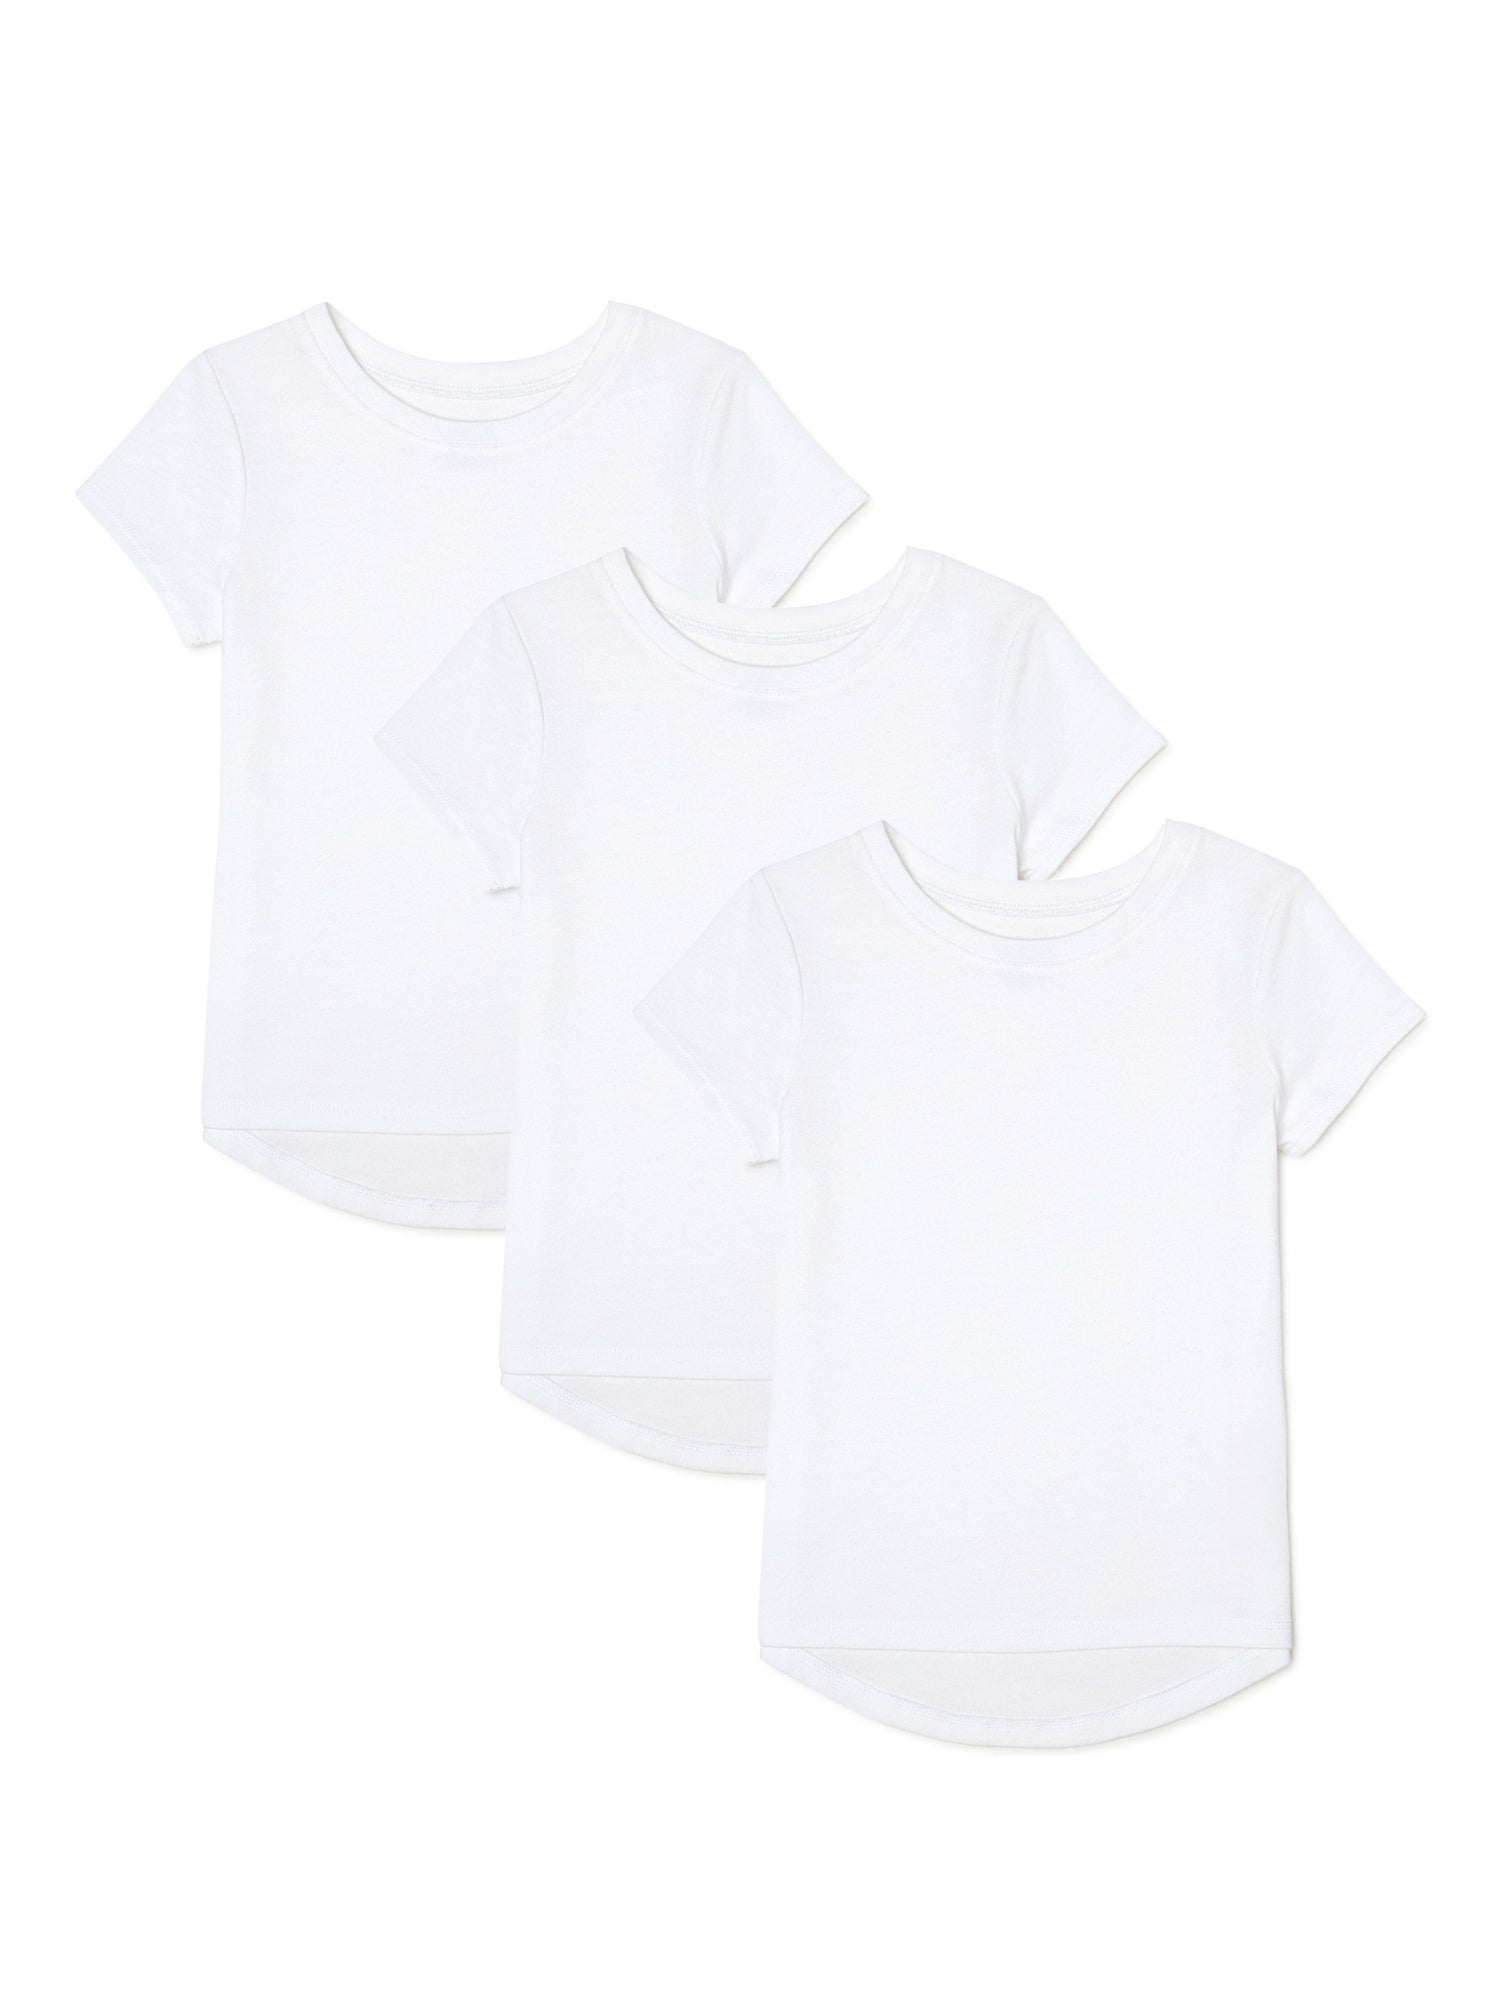 Garanimals Baby Girls & Toddler Girls Short Sleeve Solid T-shirts, 3-Pack